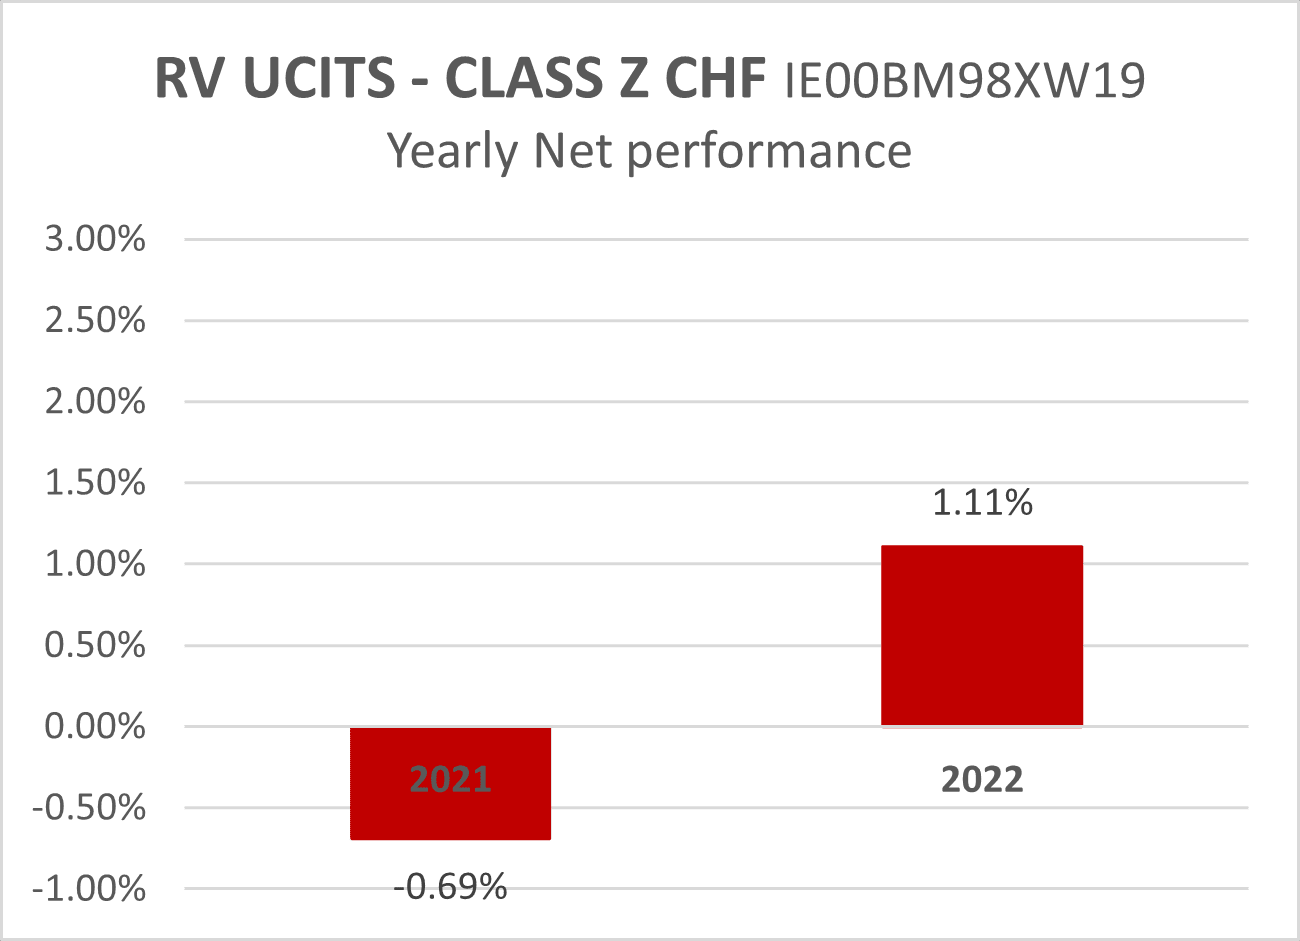 RV UCITS - CLASS Z CHF IE00BM98XW19 - Yearly Net performance